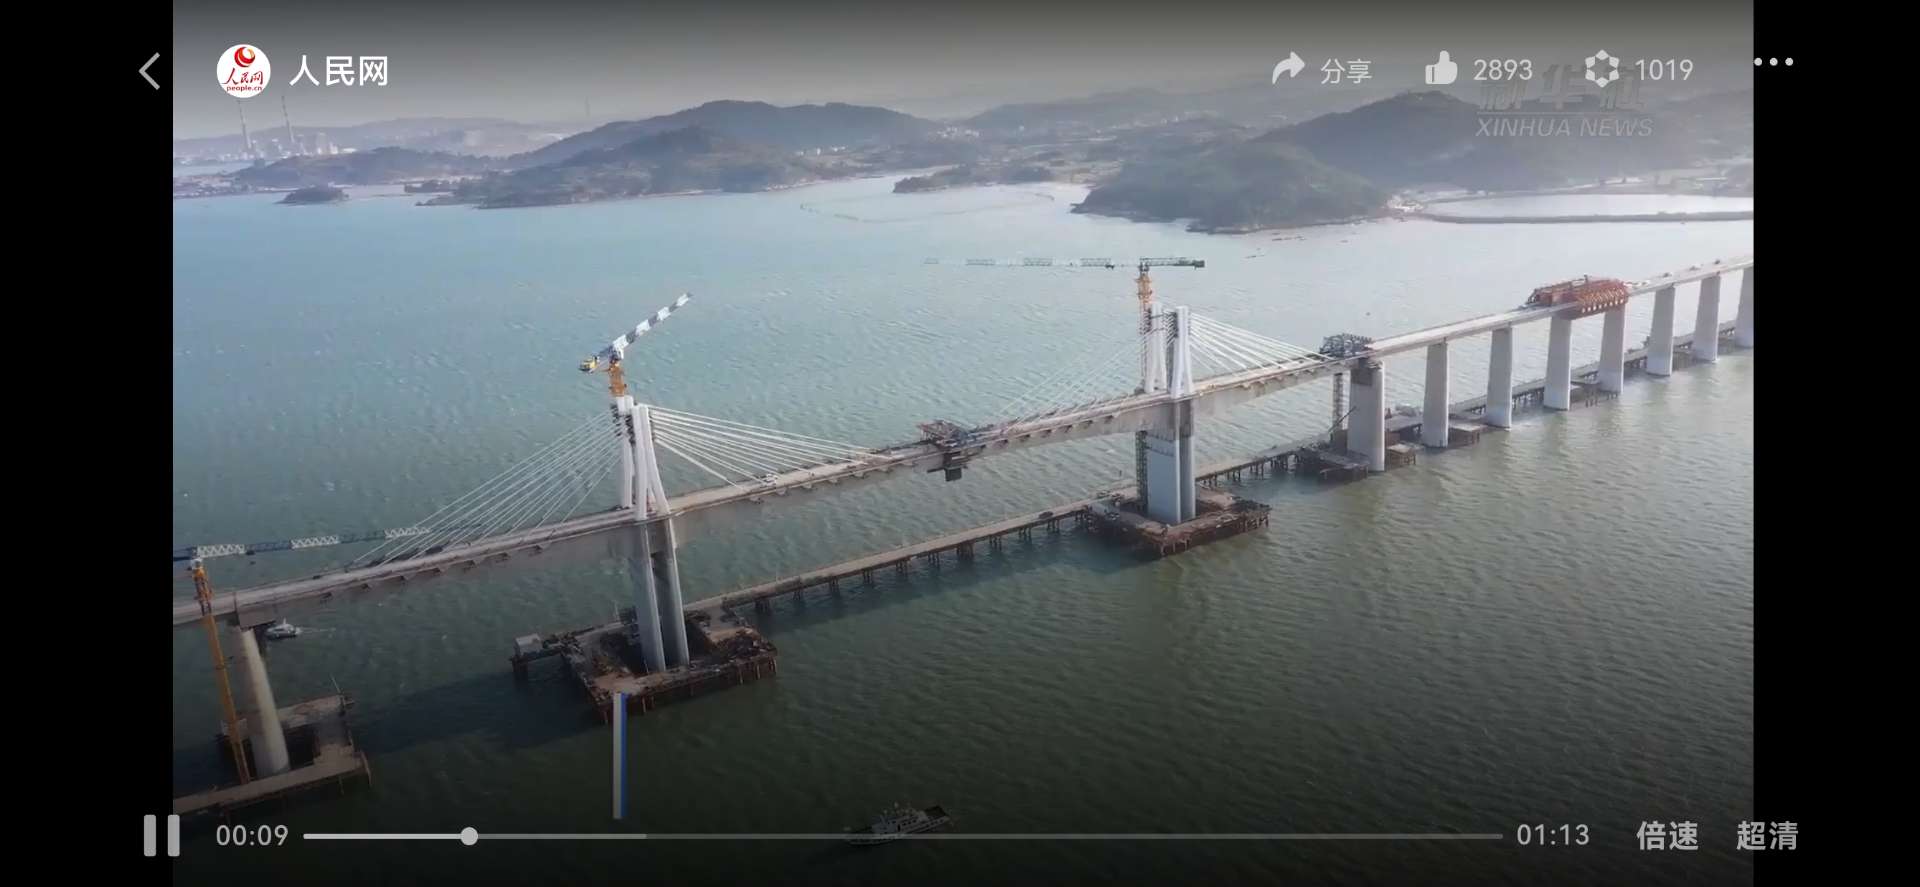 “AG体育”中国首条跨海高铁成功合龙！